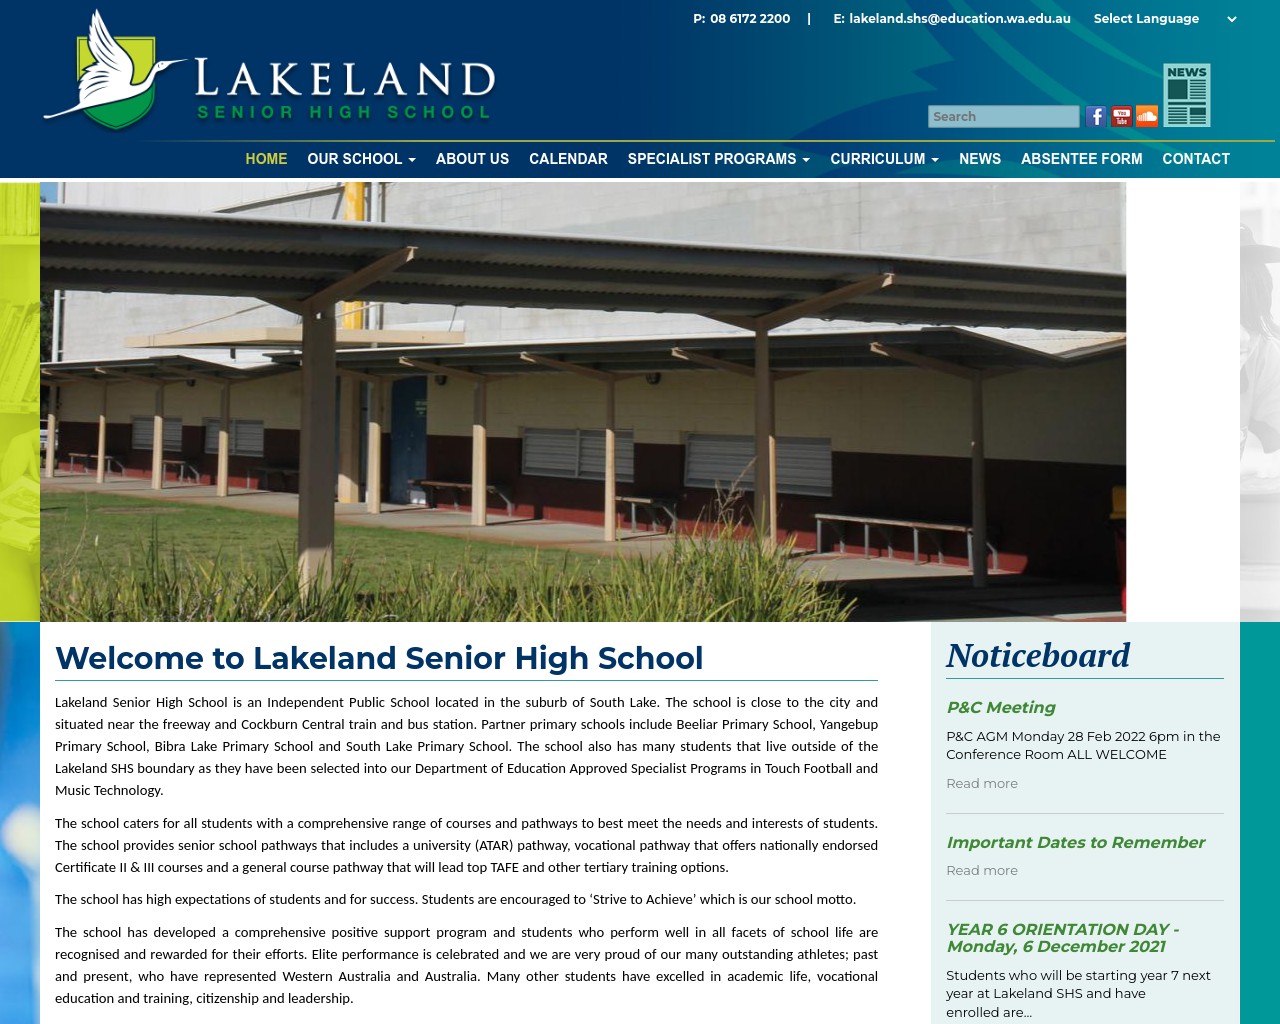 Lakeland Senior High School